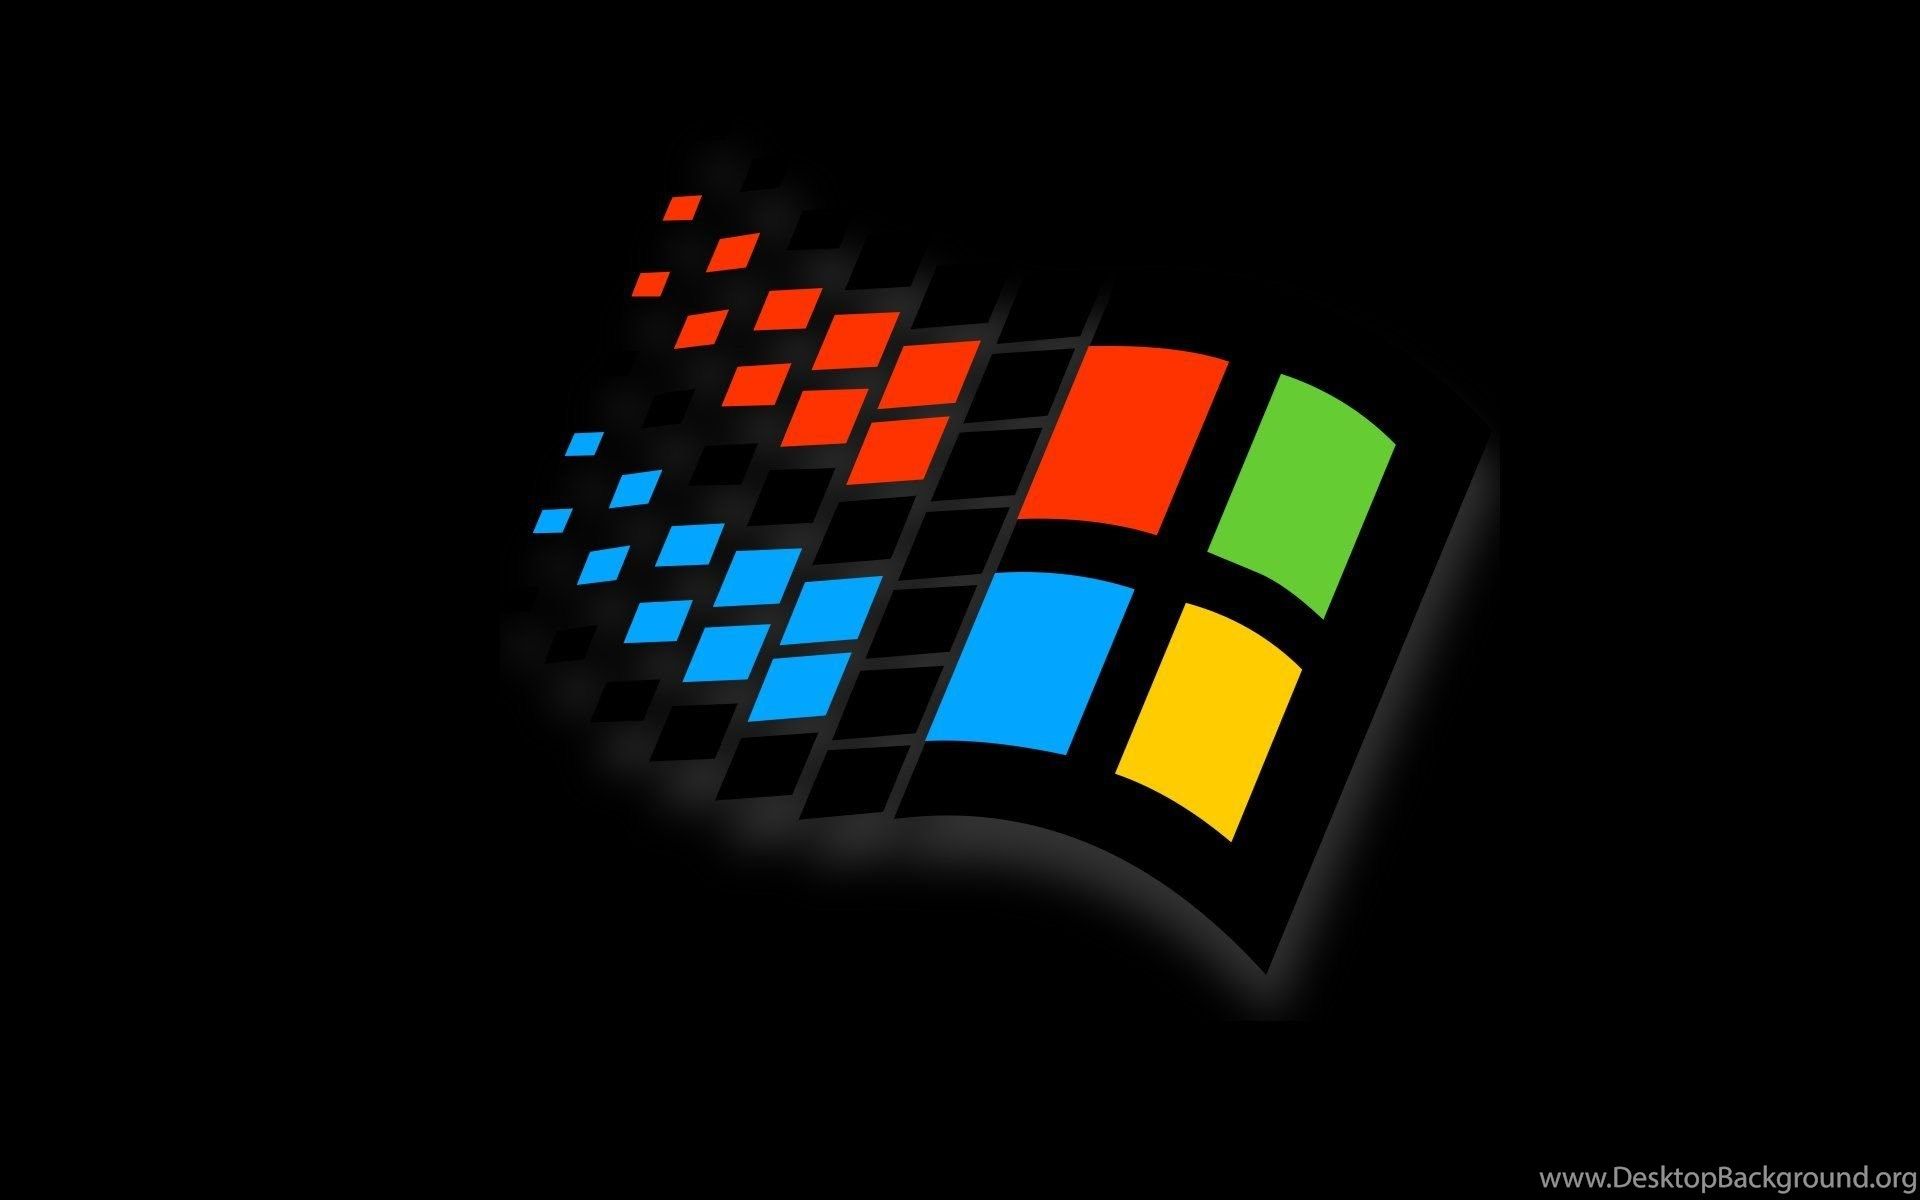 Windows 98 Wallpaper Desktop Background